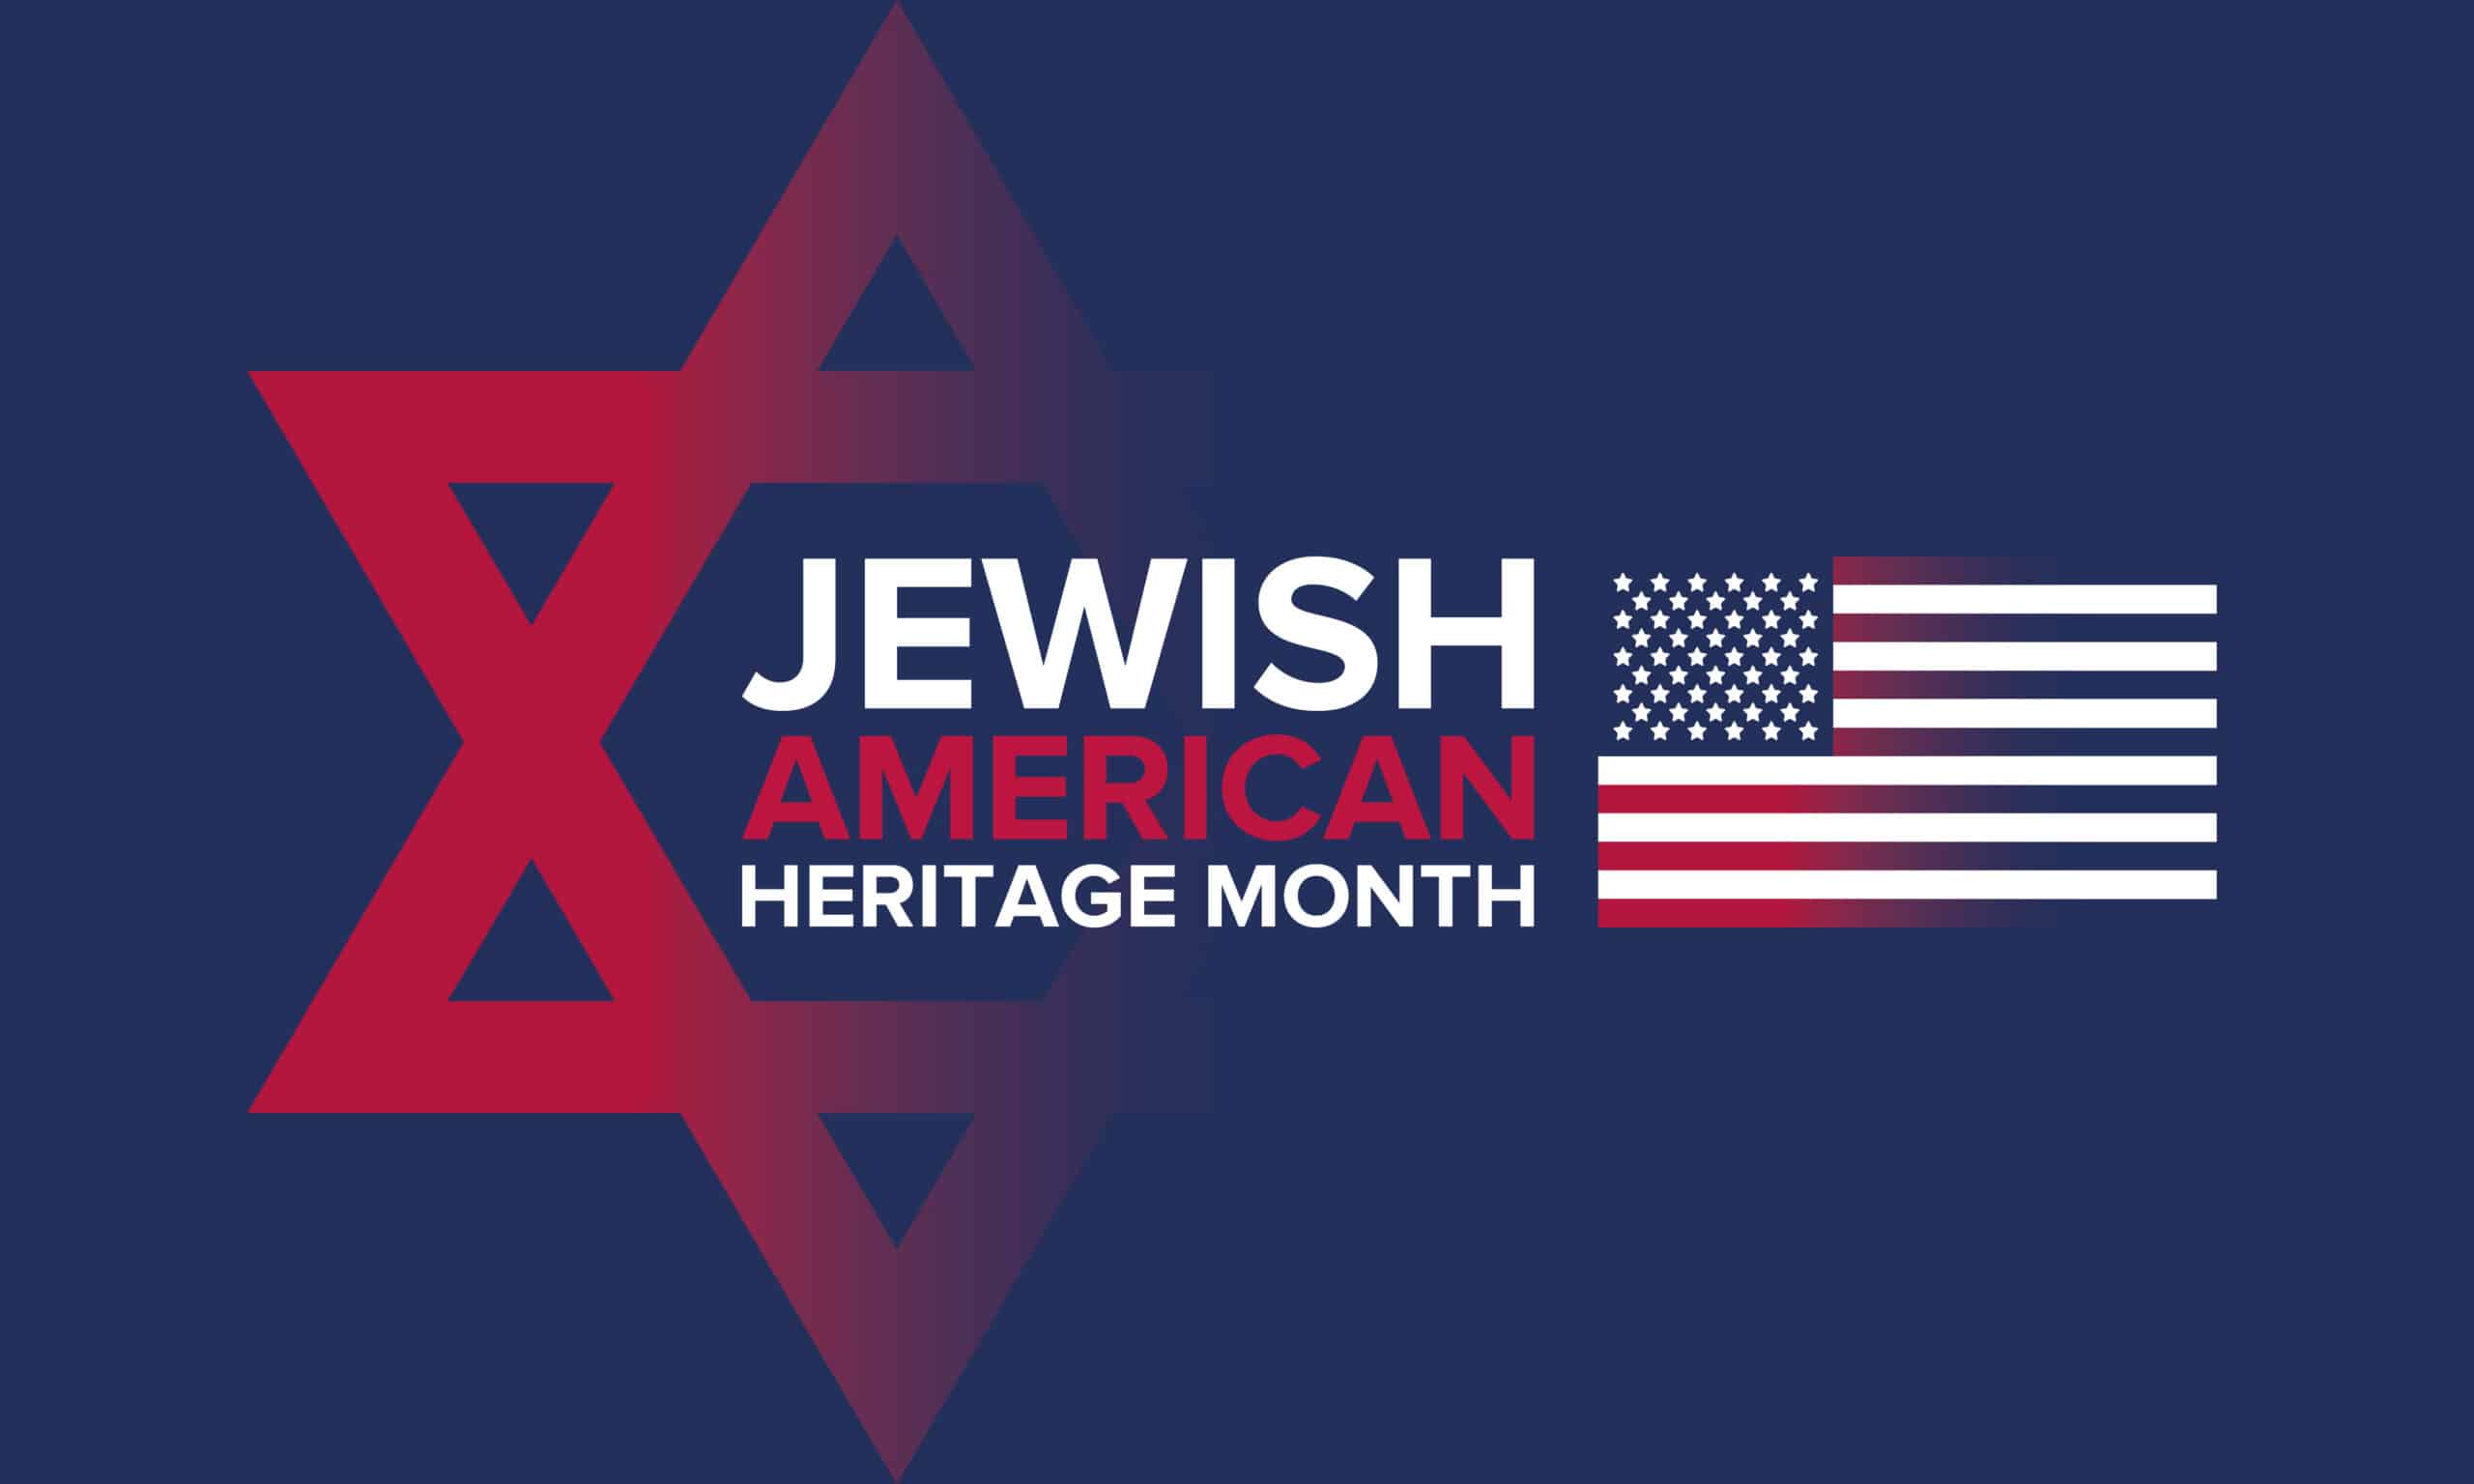 Celebrating Jewish-American Heritage Month - Vested